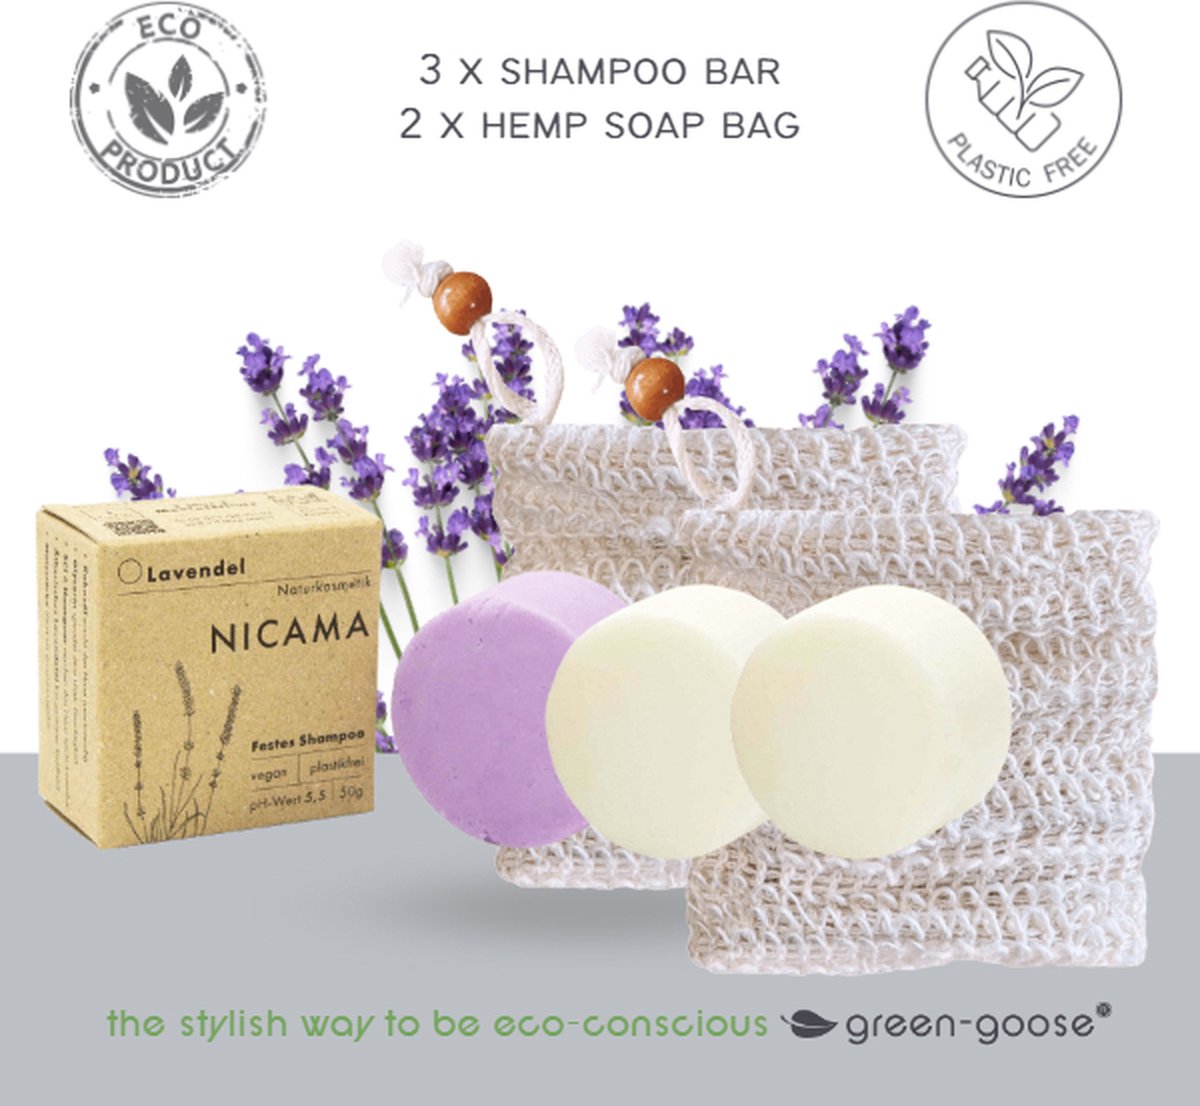 Nicama 3 x Shampoo Bar | Lavendel, Limoengras, Natuur | Met 2 gratis Hennep Biokatoen Zeepzakjes